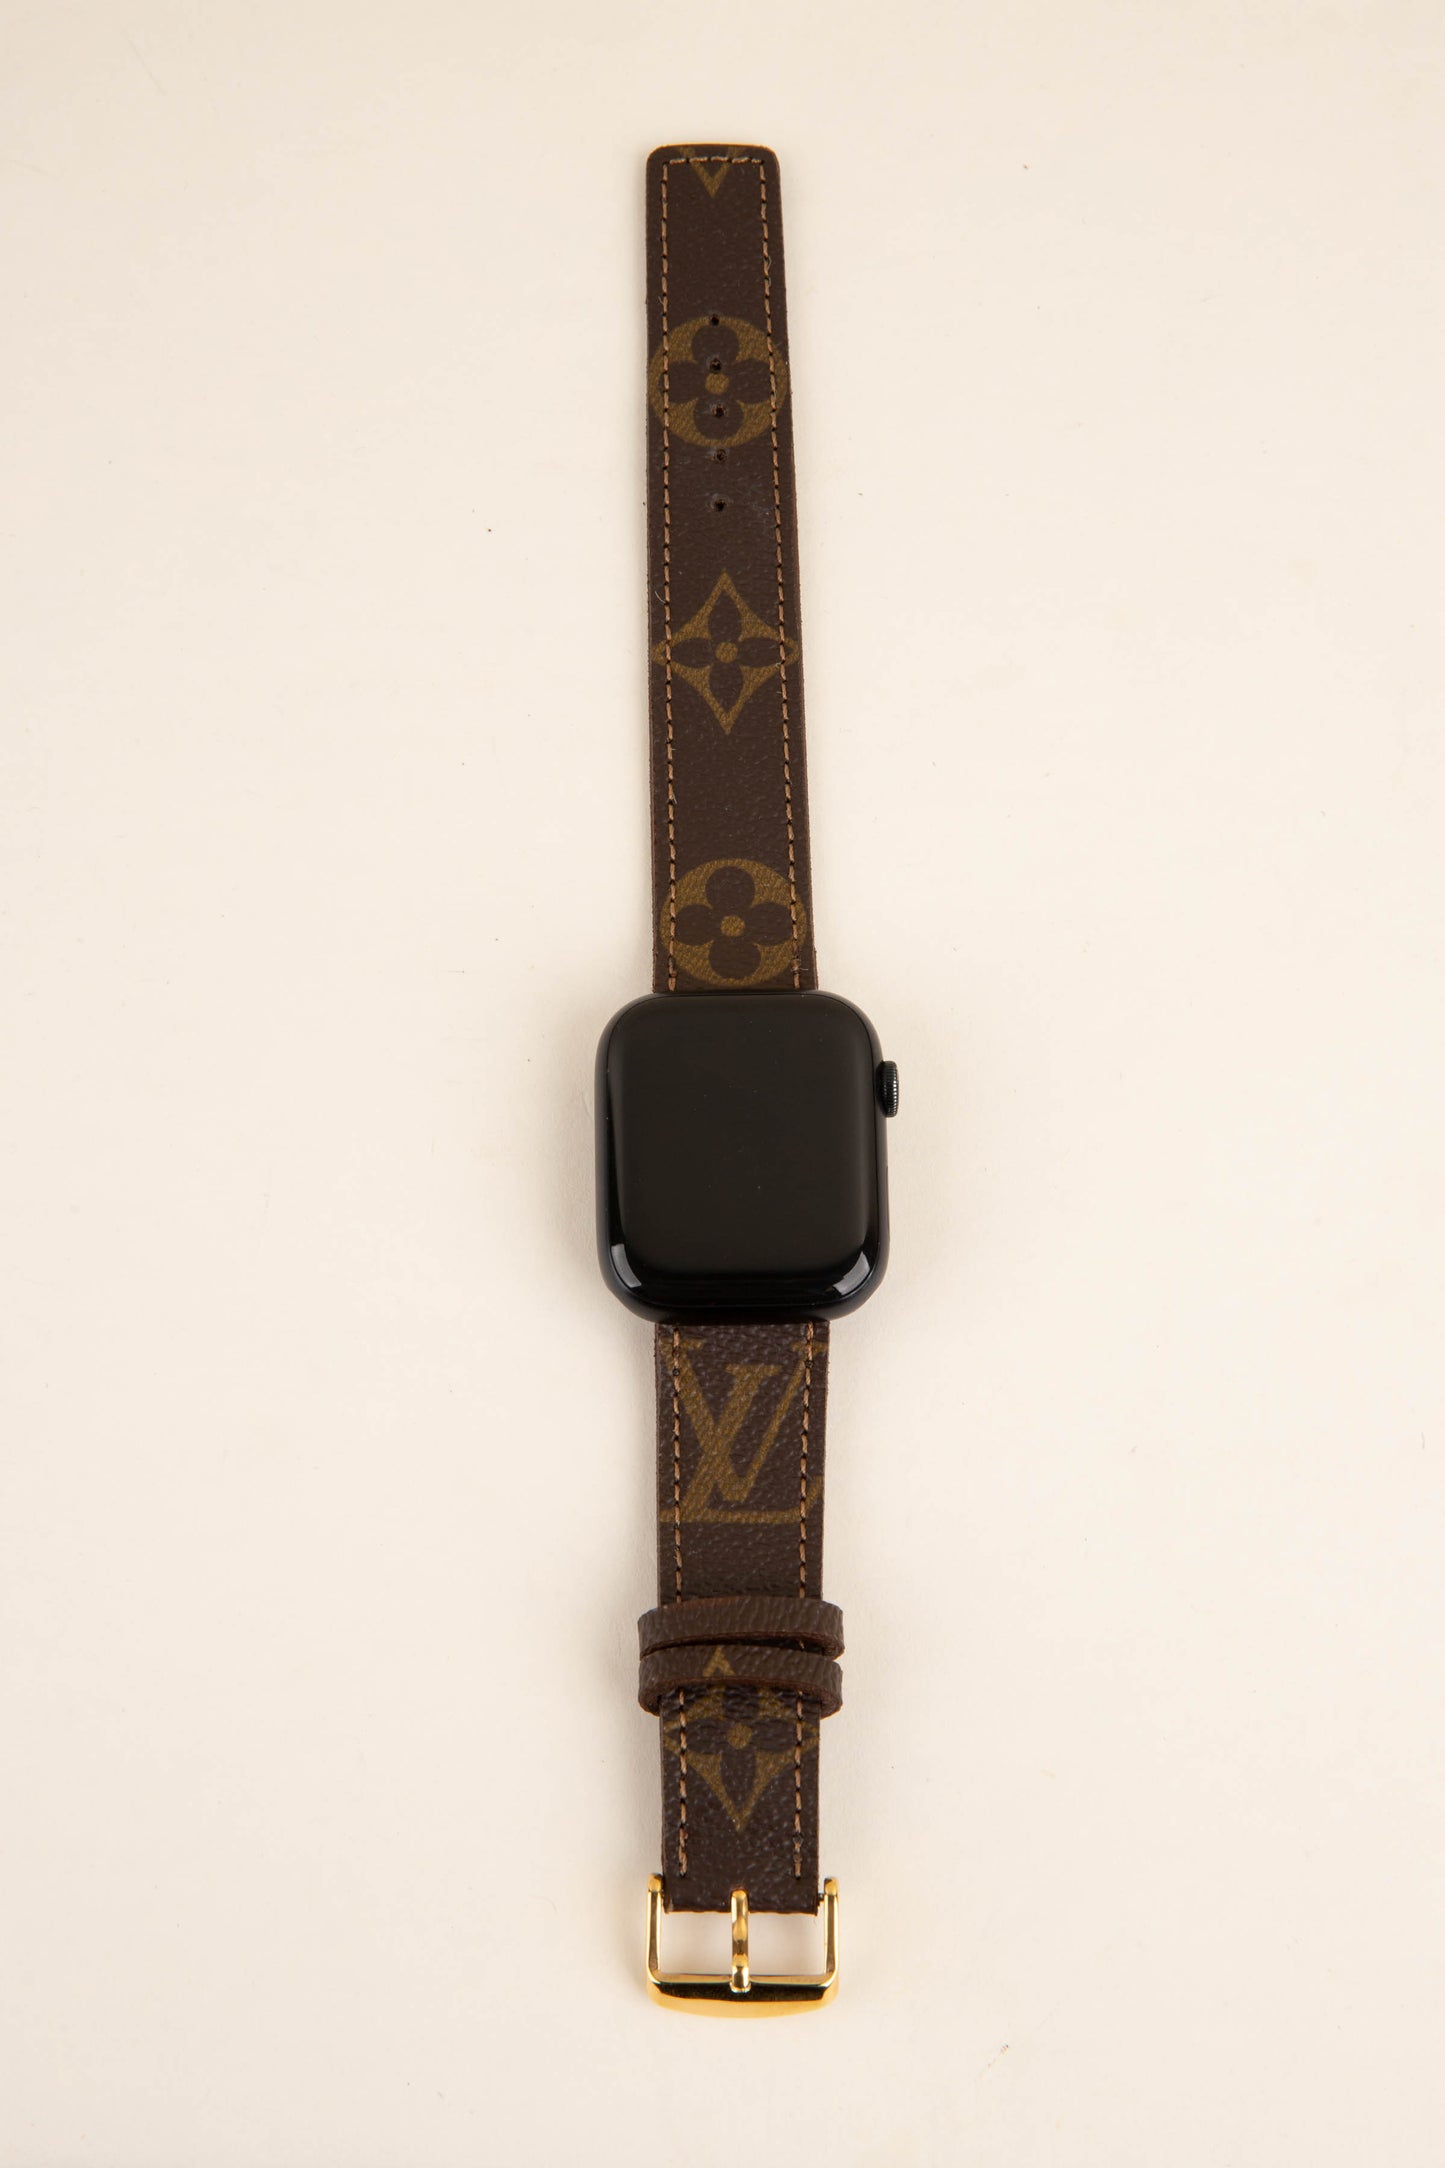 Apple Watch Band 38mm Louis Vuitton